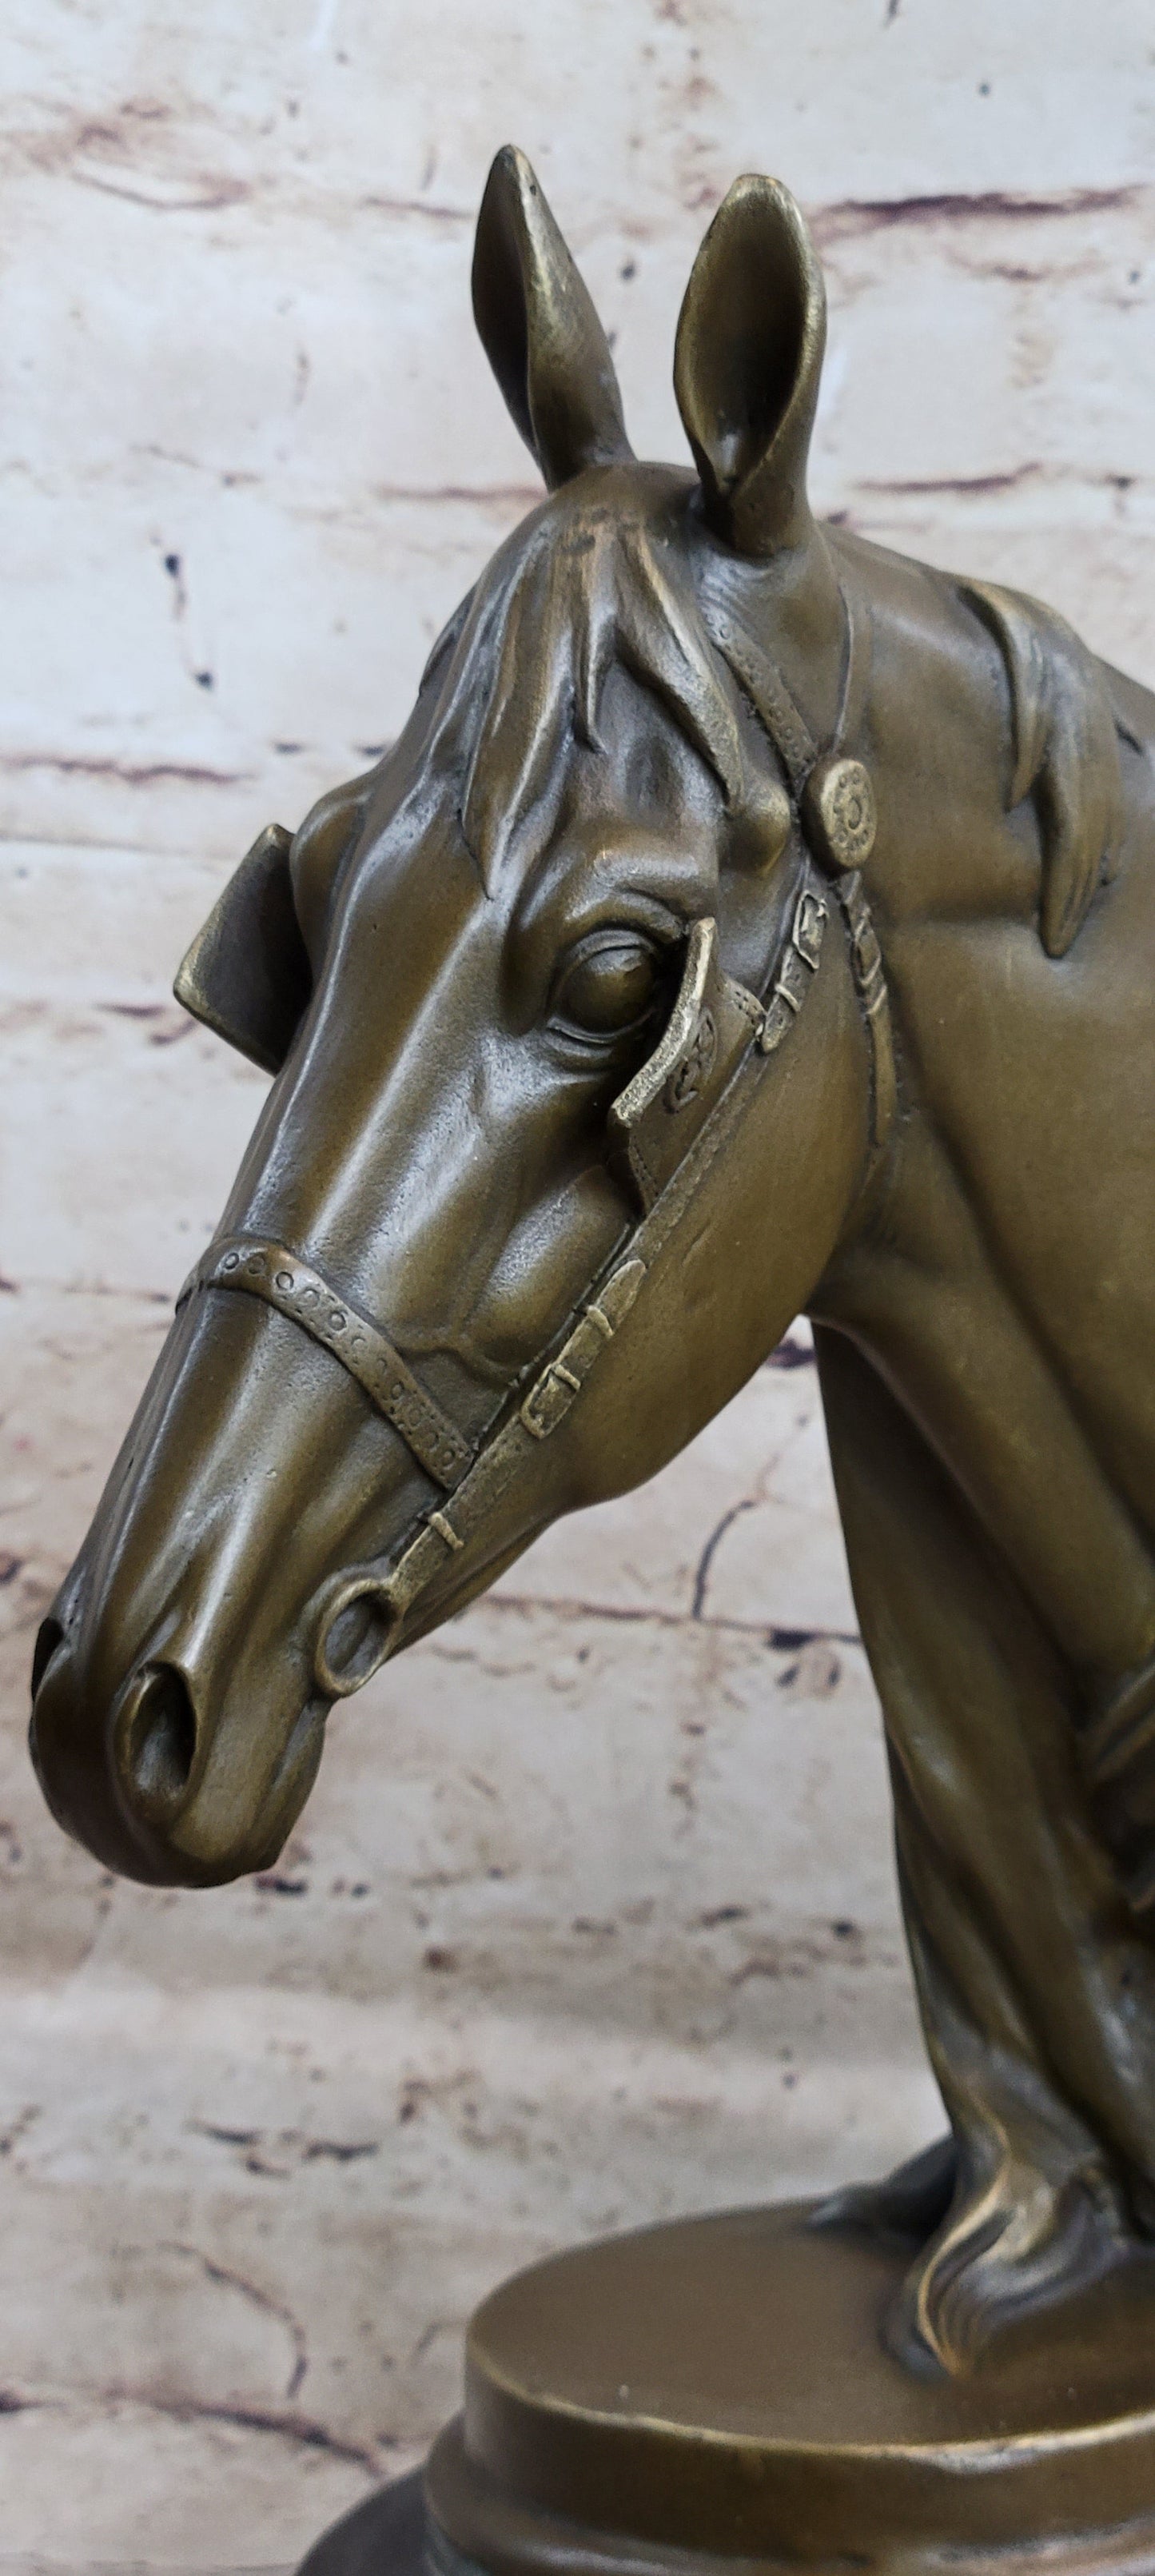 Hot Cast Bronze Horses Head Sculpture Marble Statue Figurine Barye Home Decor Art